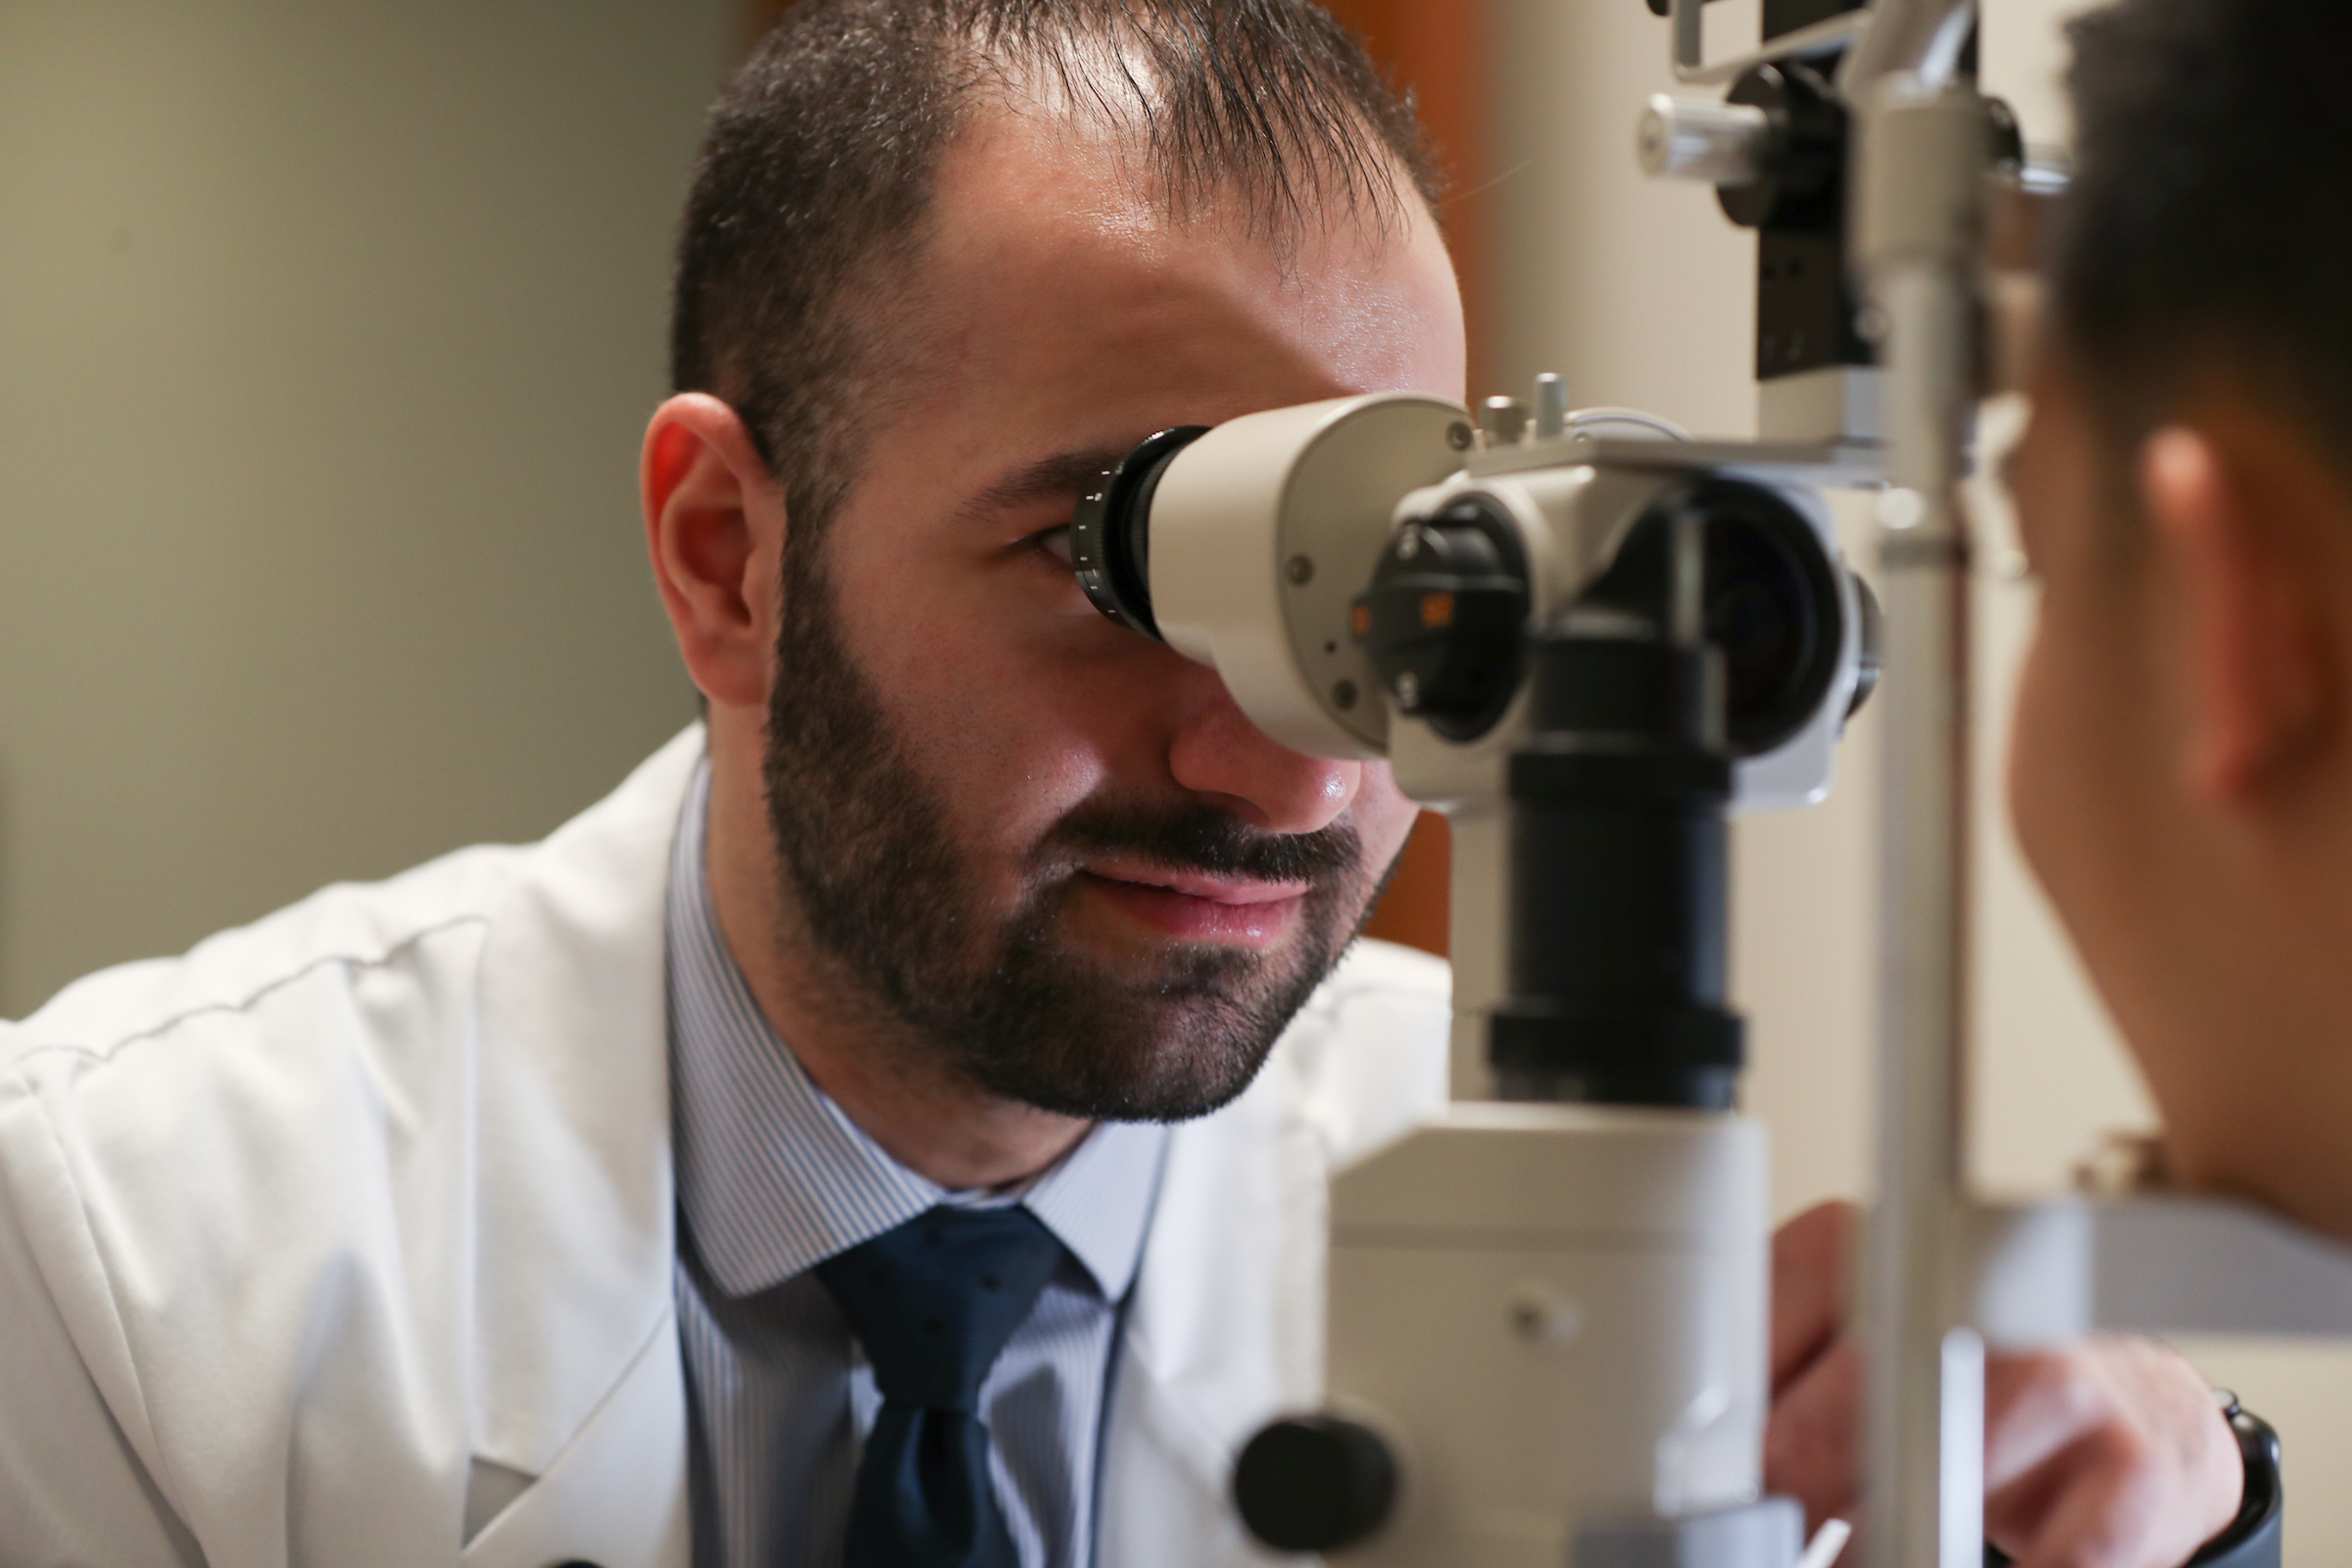 Student optometrist performing an eye exam